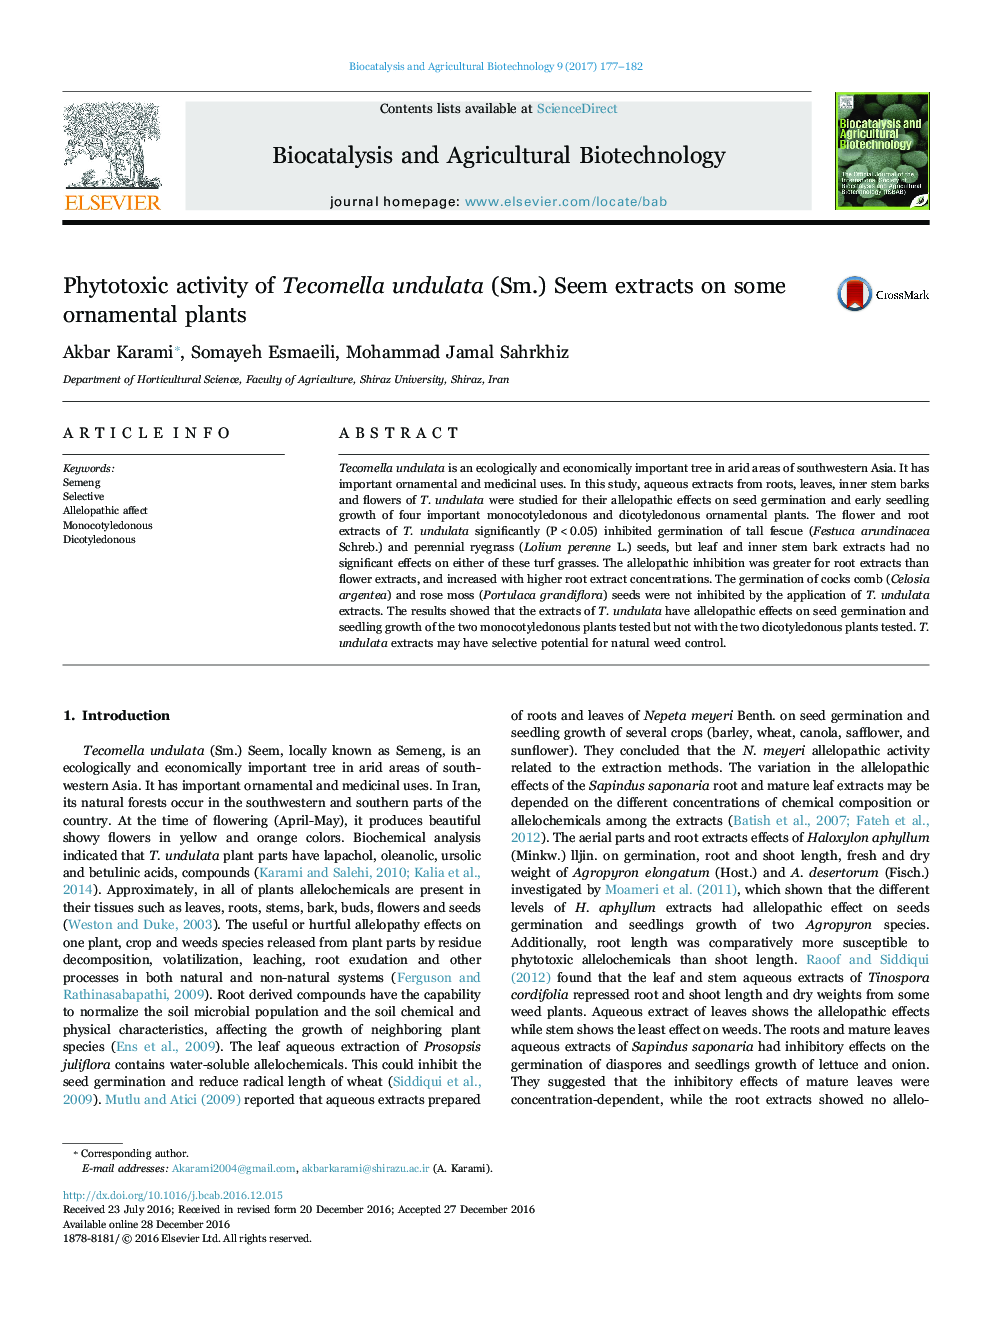 Phytotoxic activity of Tecomella undulata (Sm.) Seem extracts on some ornamental plants